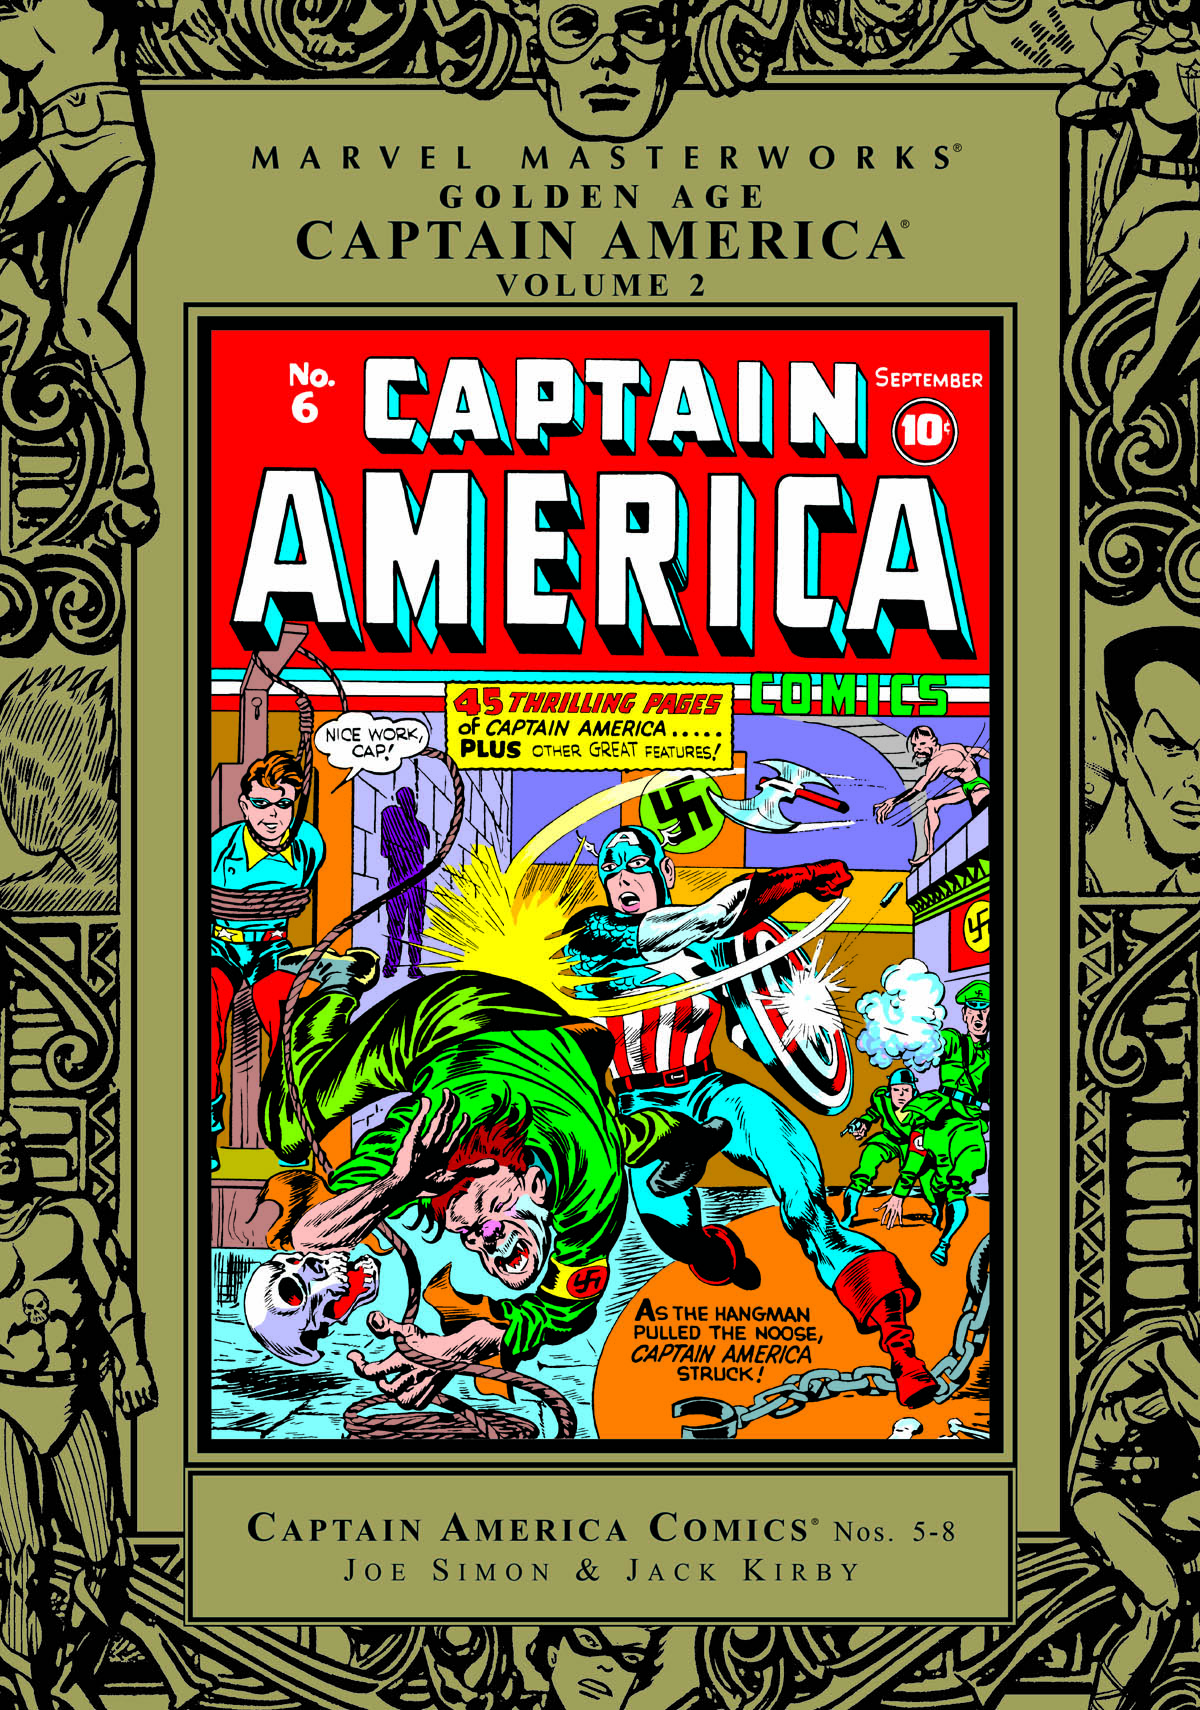 Marvel Masterworks: Golden Age Captain America Vol. 2 (Trade Paperback)